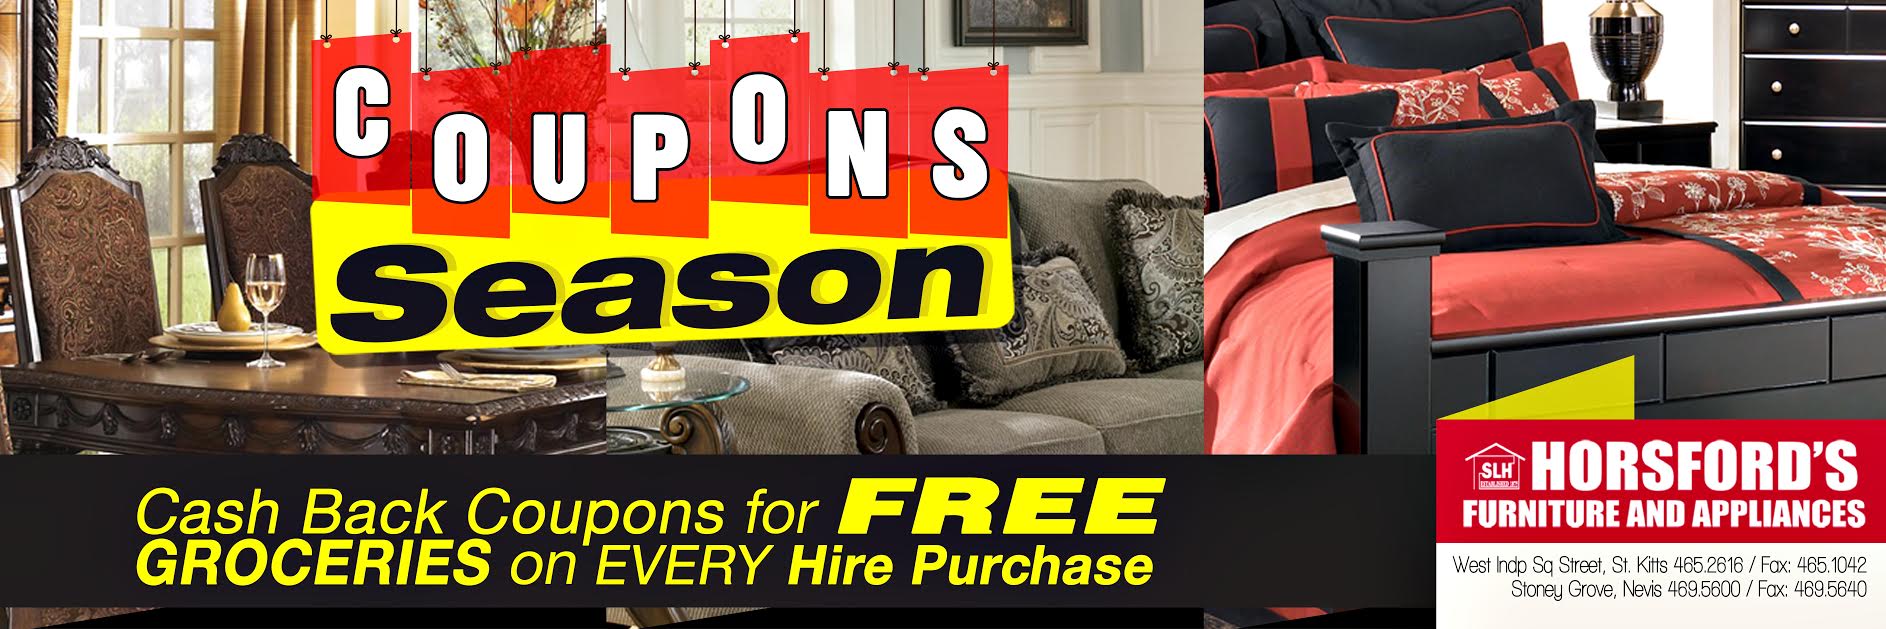 furniture-promotion-coupon-season-xl